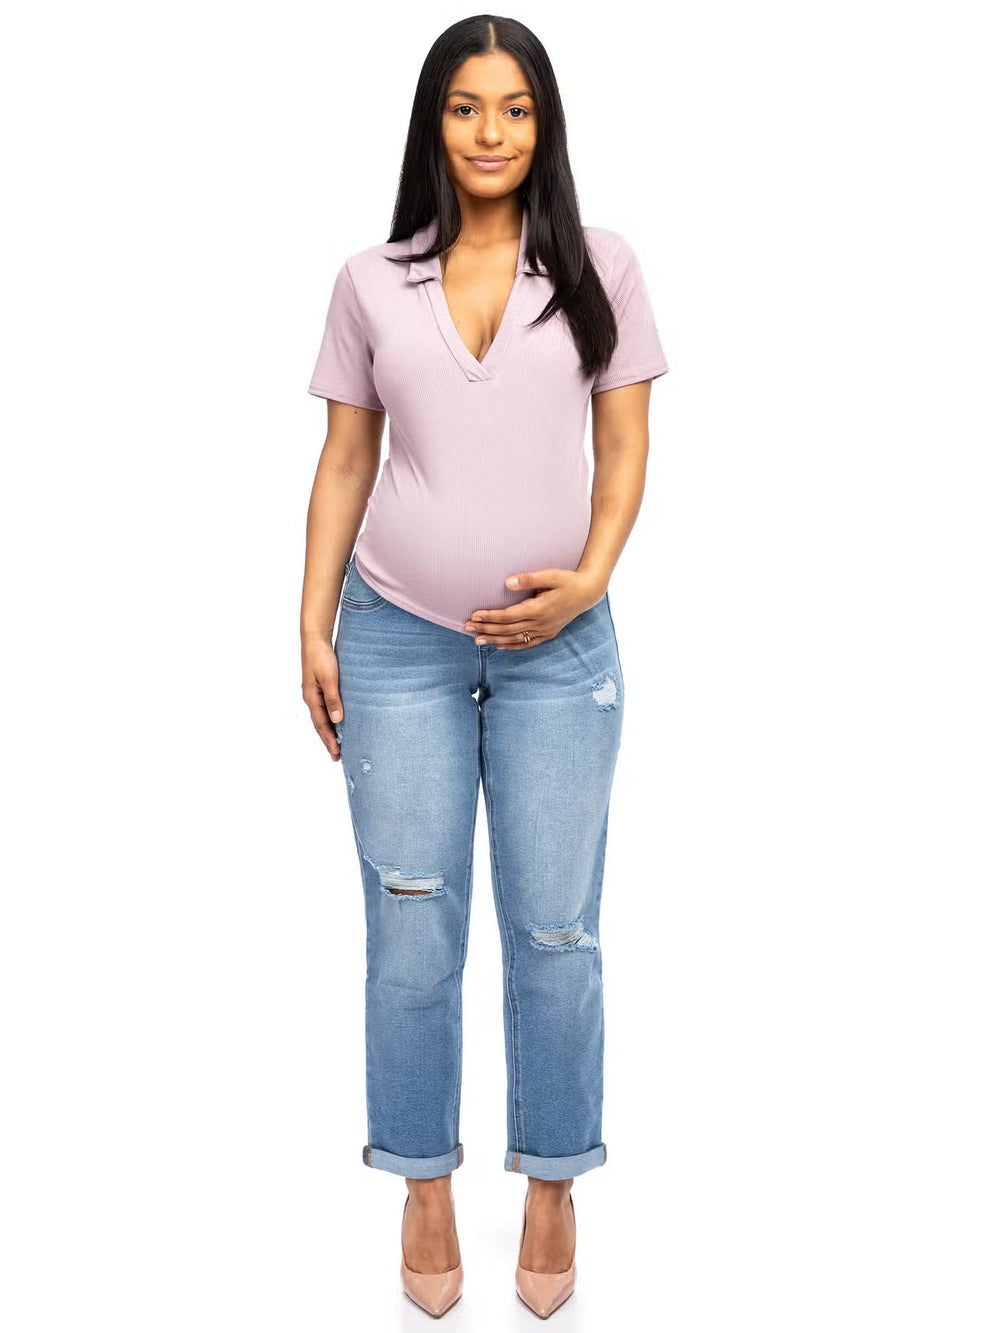 Maternity jeans Canada. Maternity denim Canada. Maternity pants. Pregnancy jeans. Pregnancy denim.